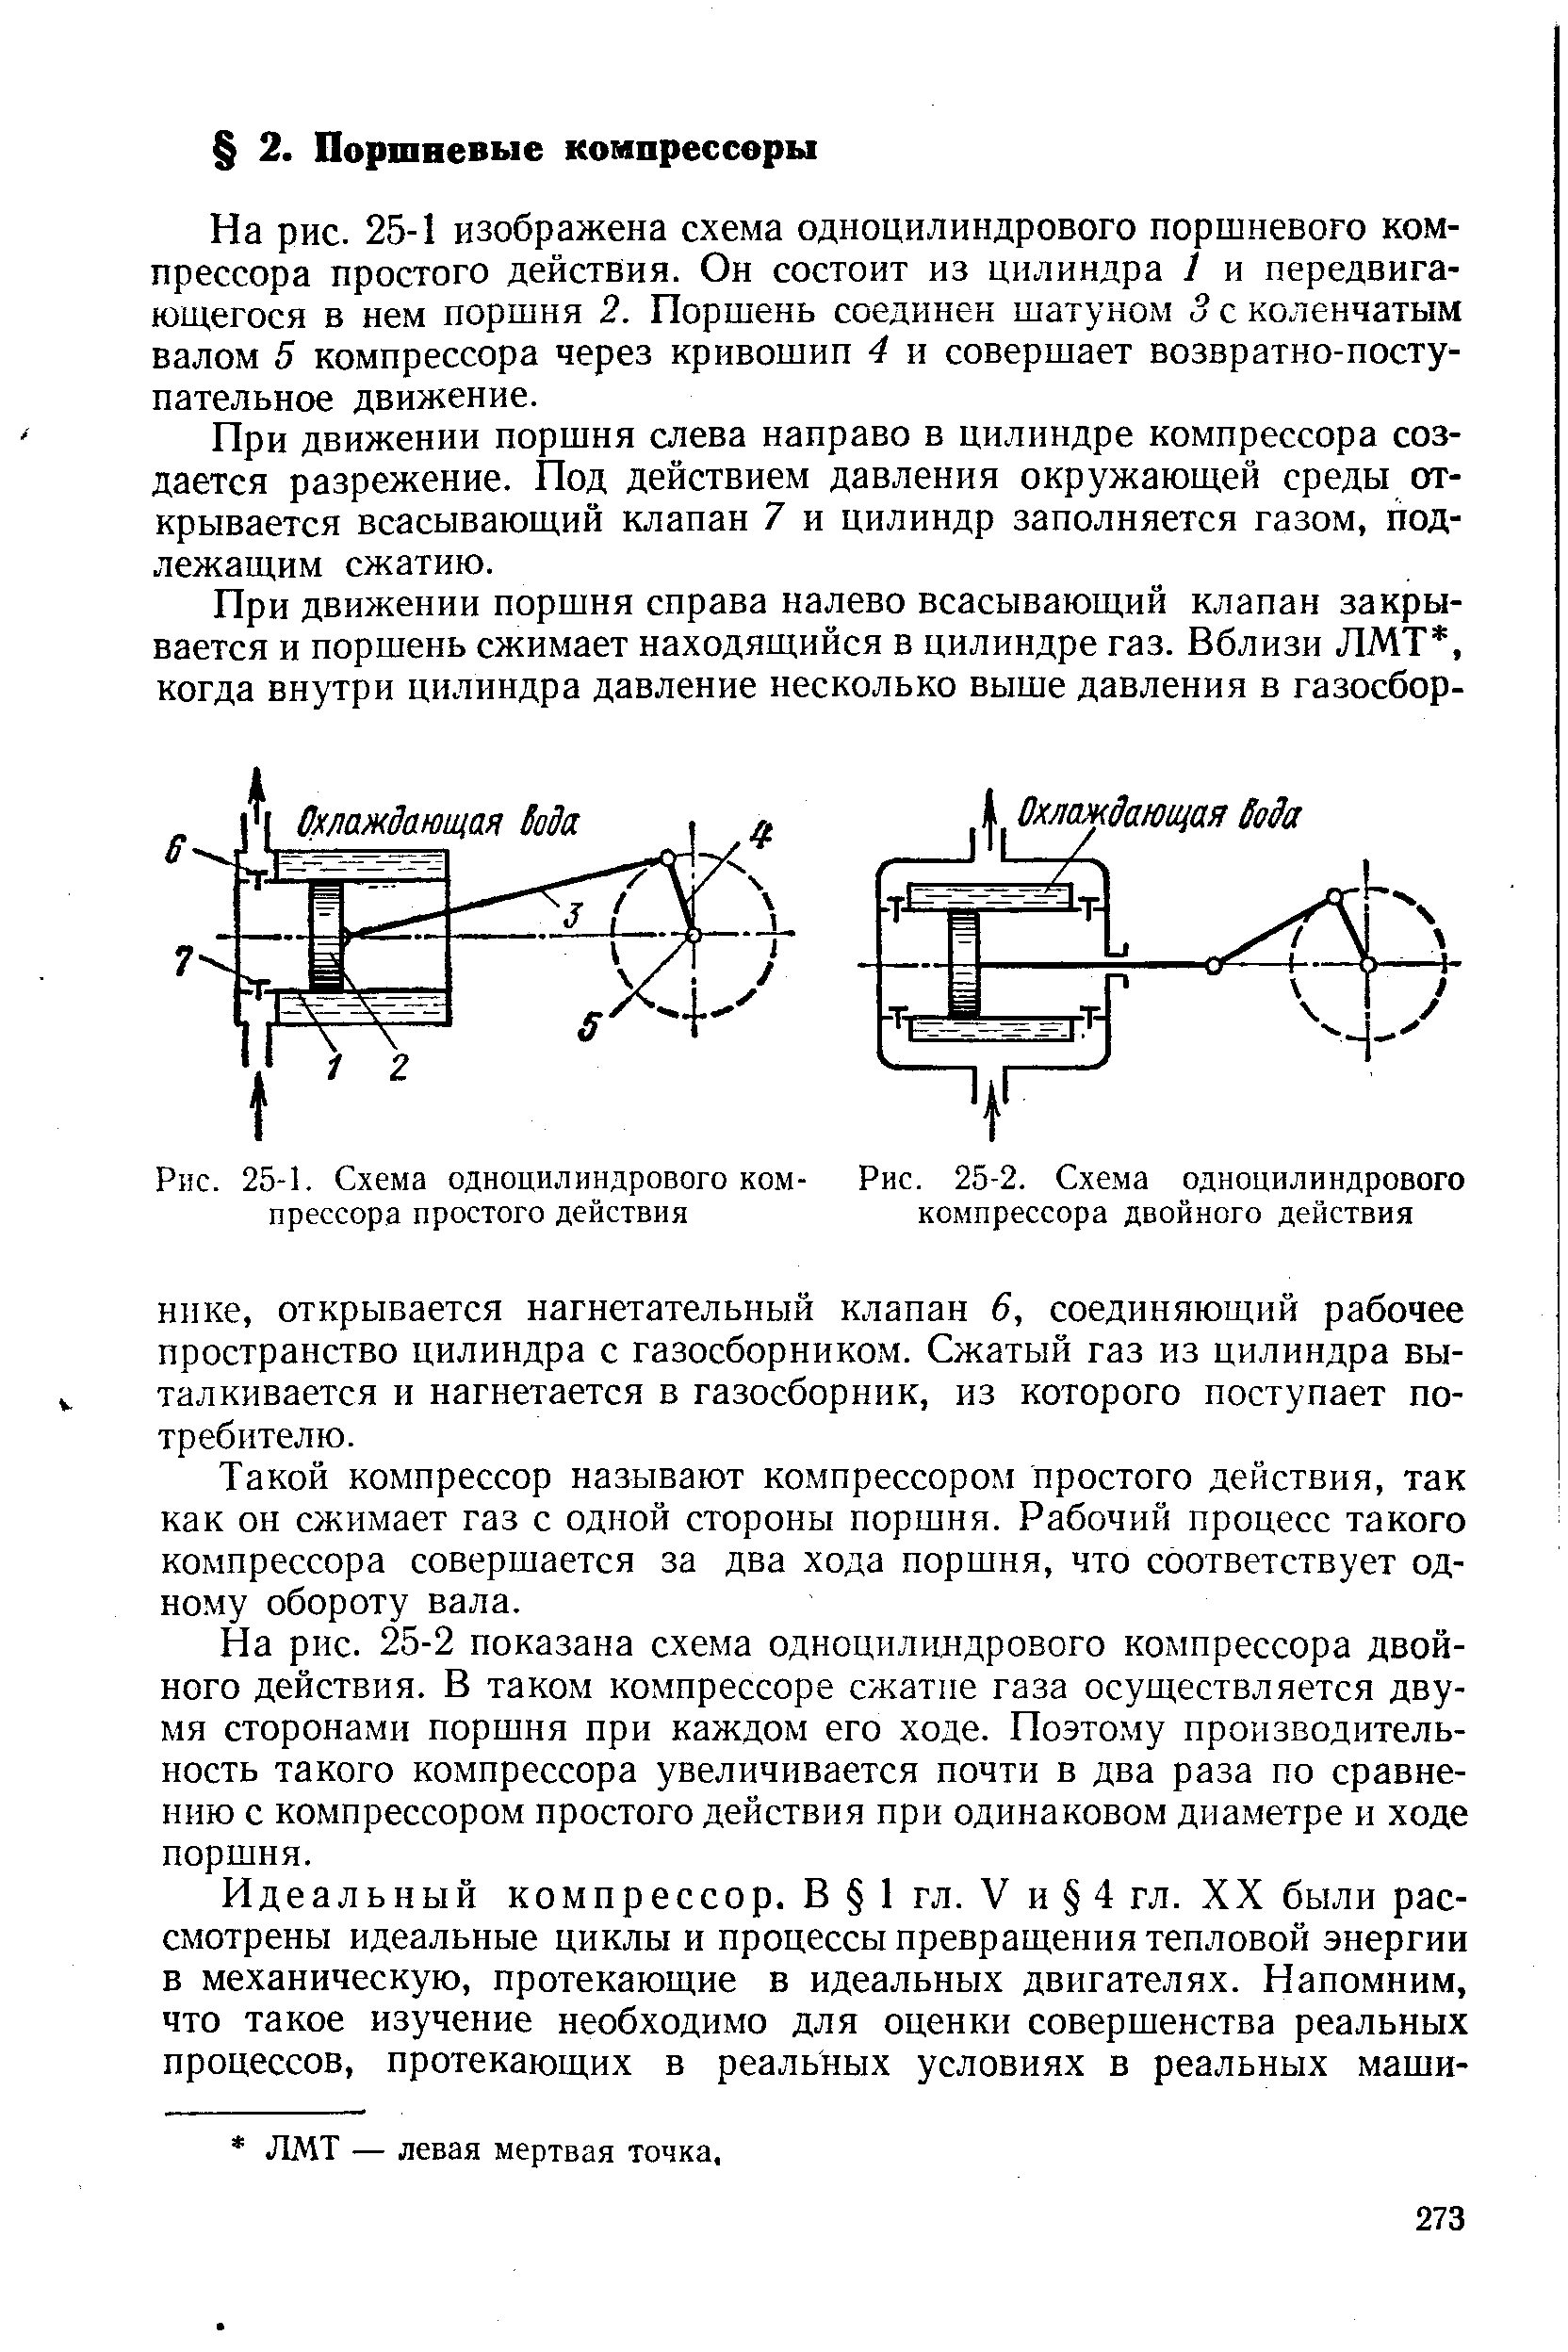 Рис. 25-2. Схема одноцилиндрового компрессора двойного действия
